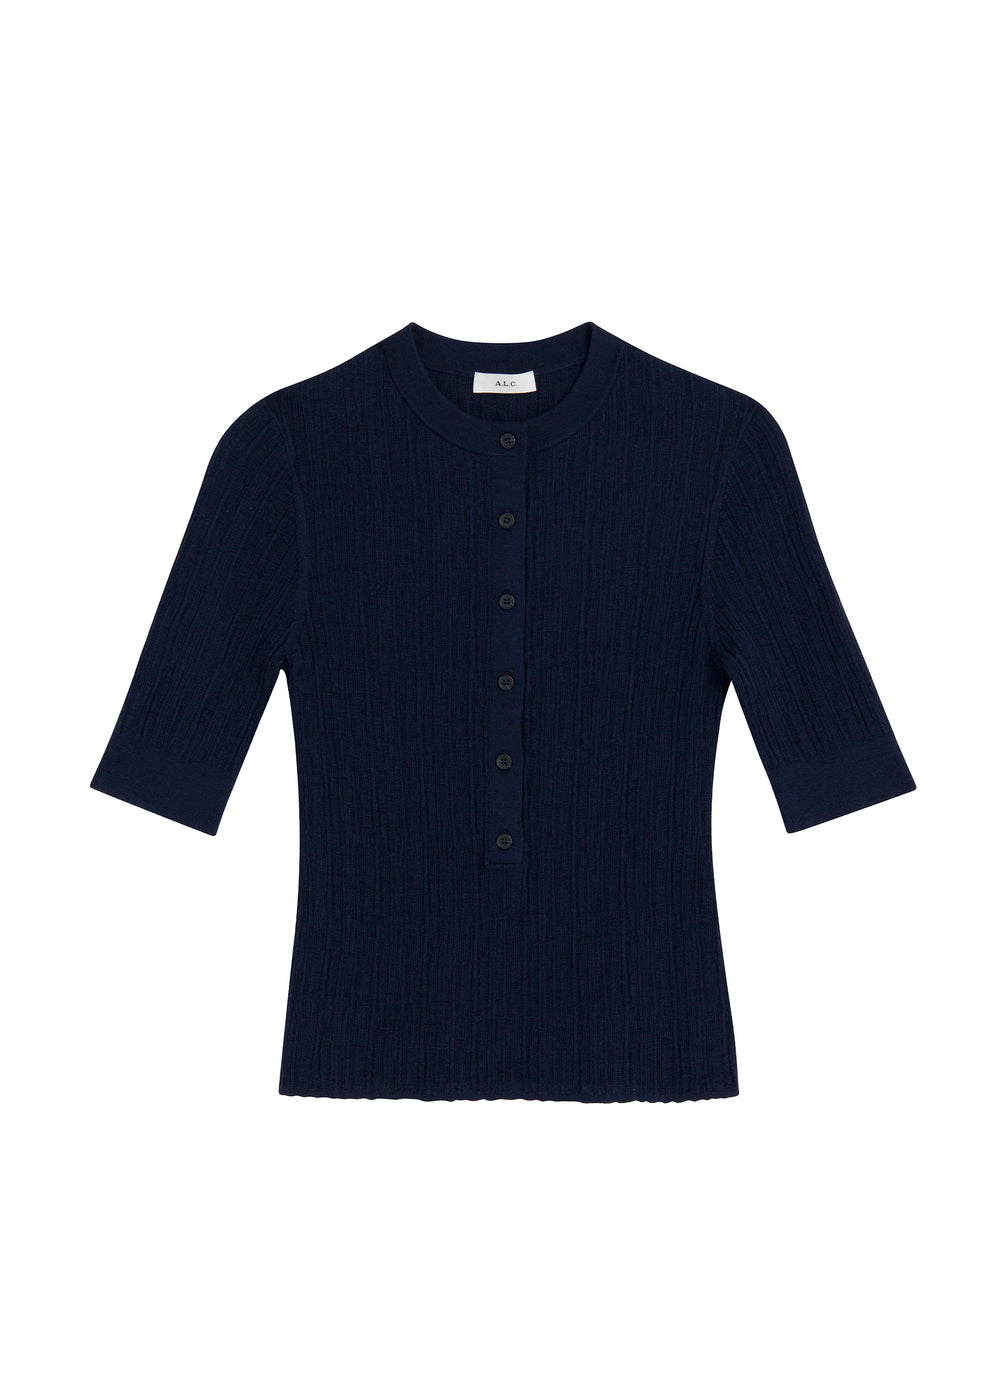 flatlay of navy blue half sleeve button placket shirt